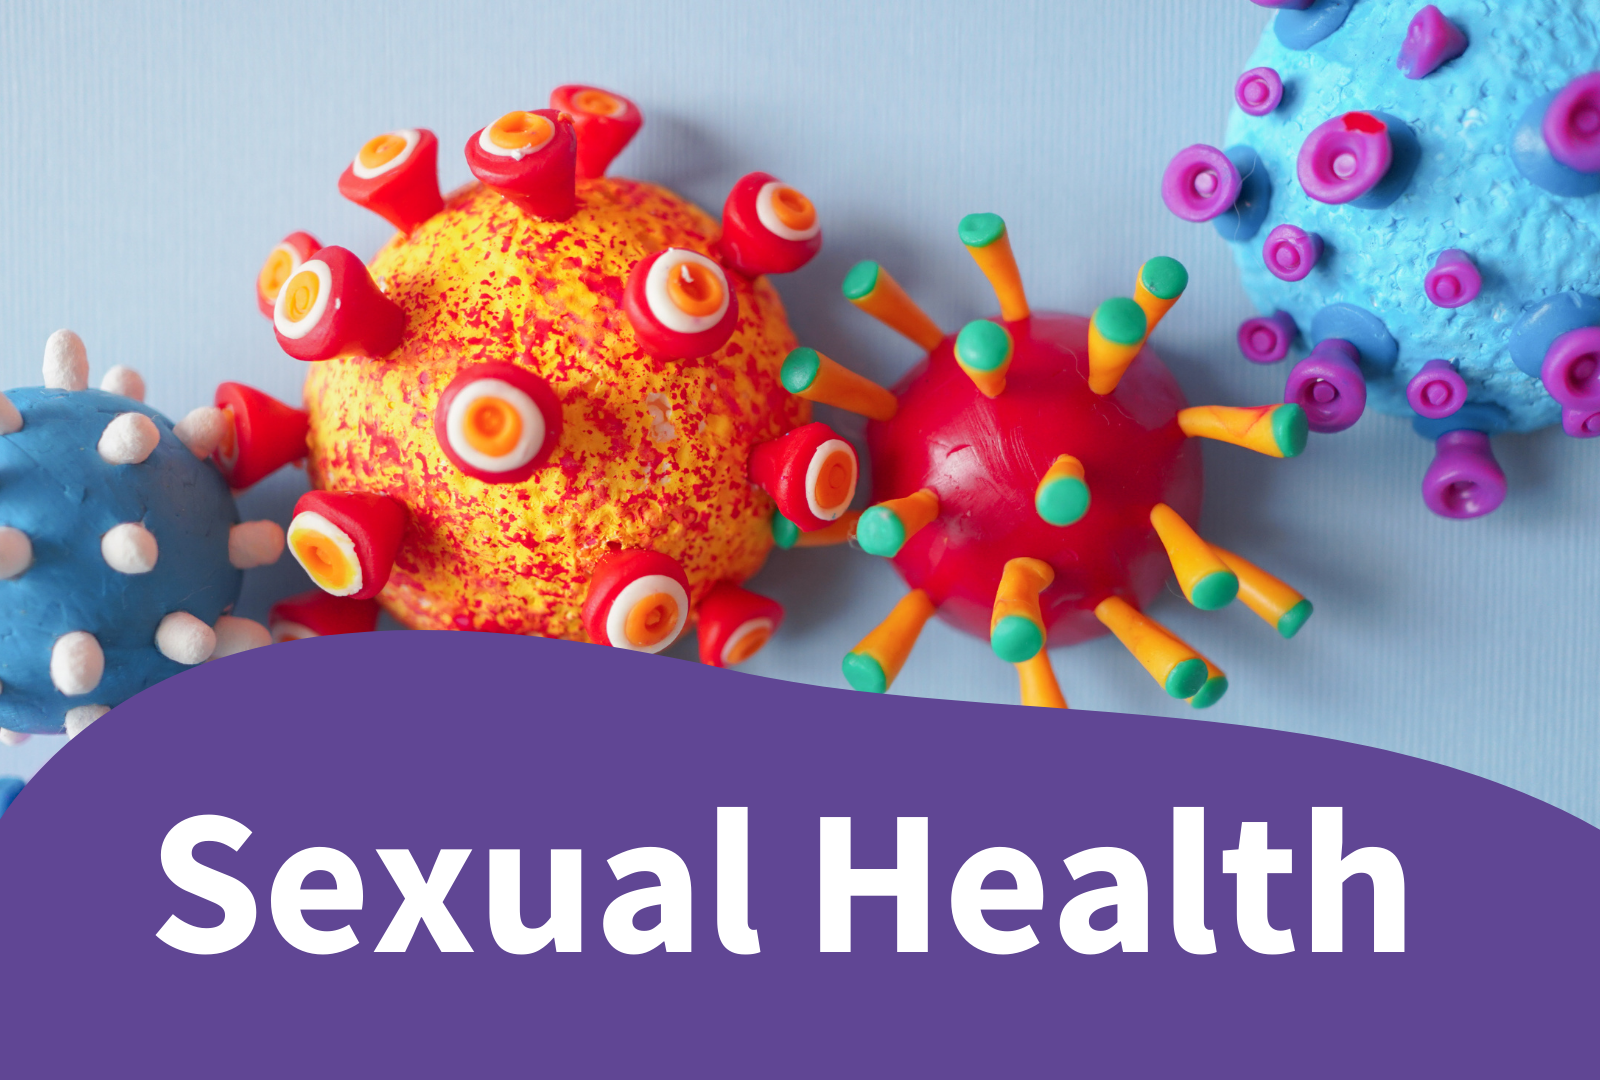 Photo of virus models - sexual health